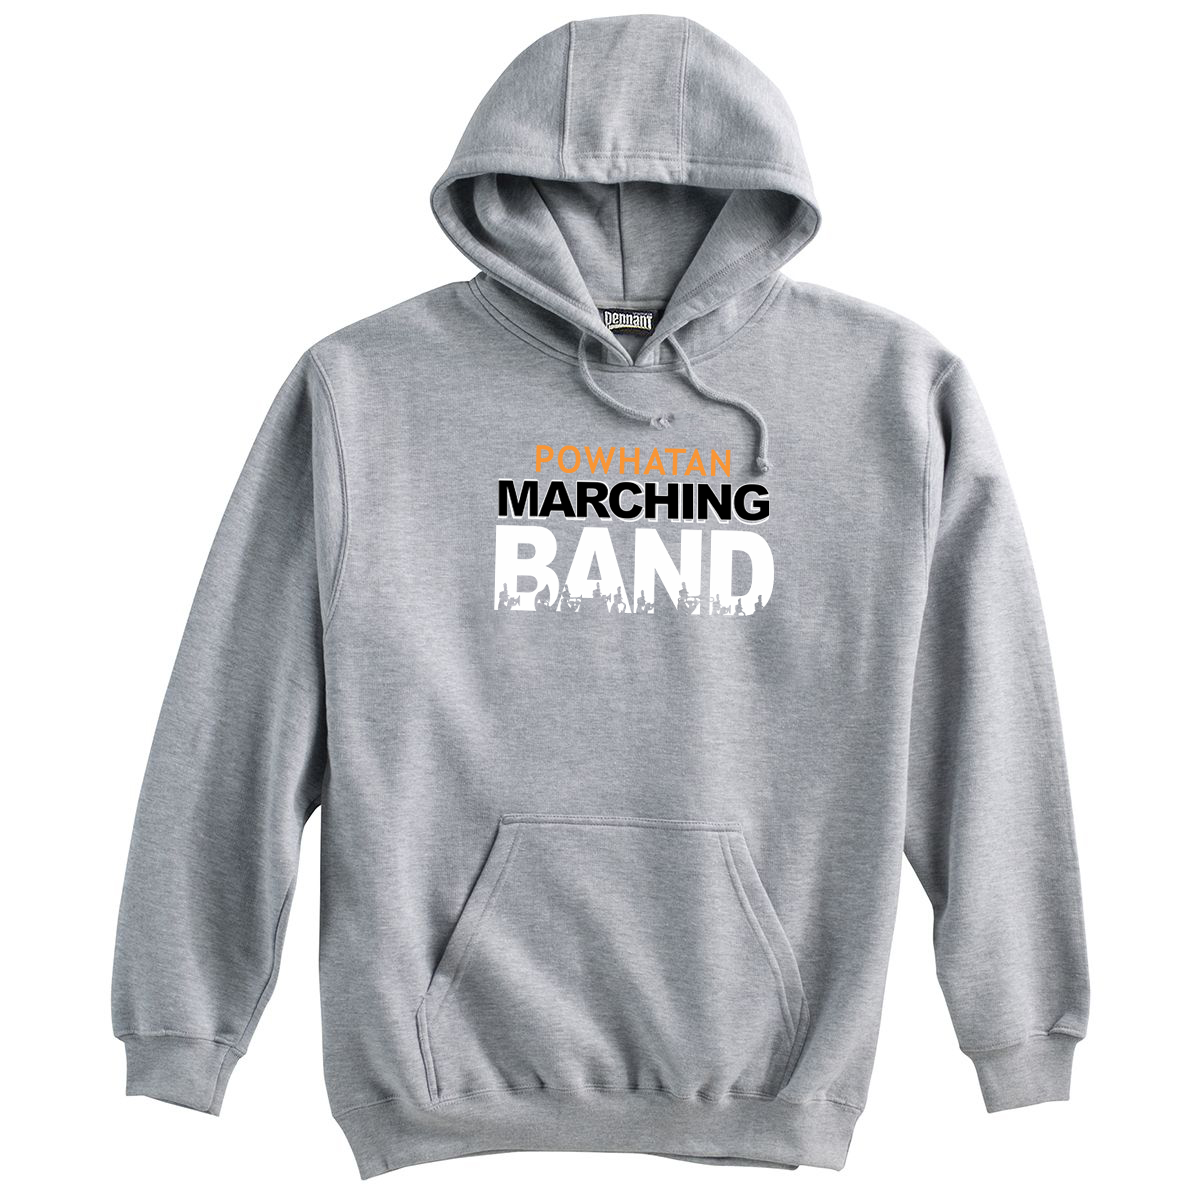 Powhatan Marching Band Sweatshirt